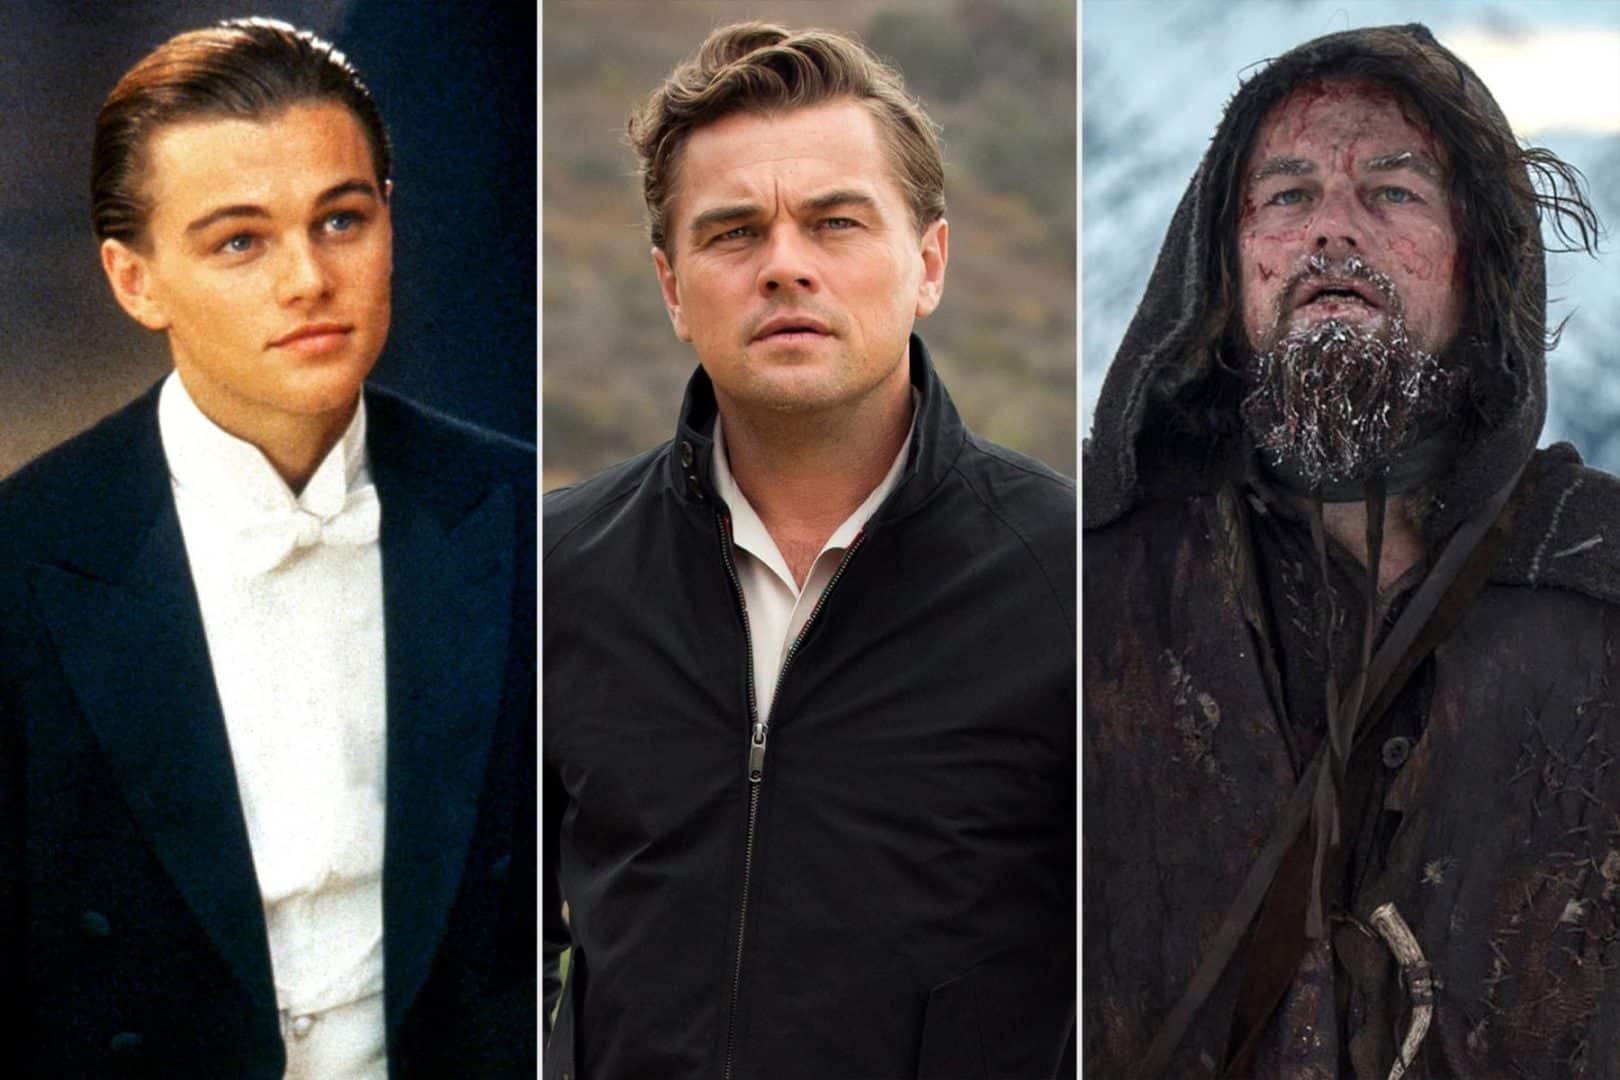 Leonardo DiCaprio Salary And Net Worth: A Secret Worth Knowing